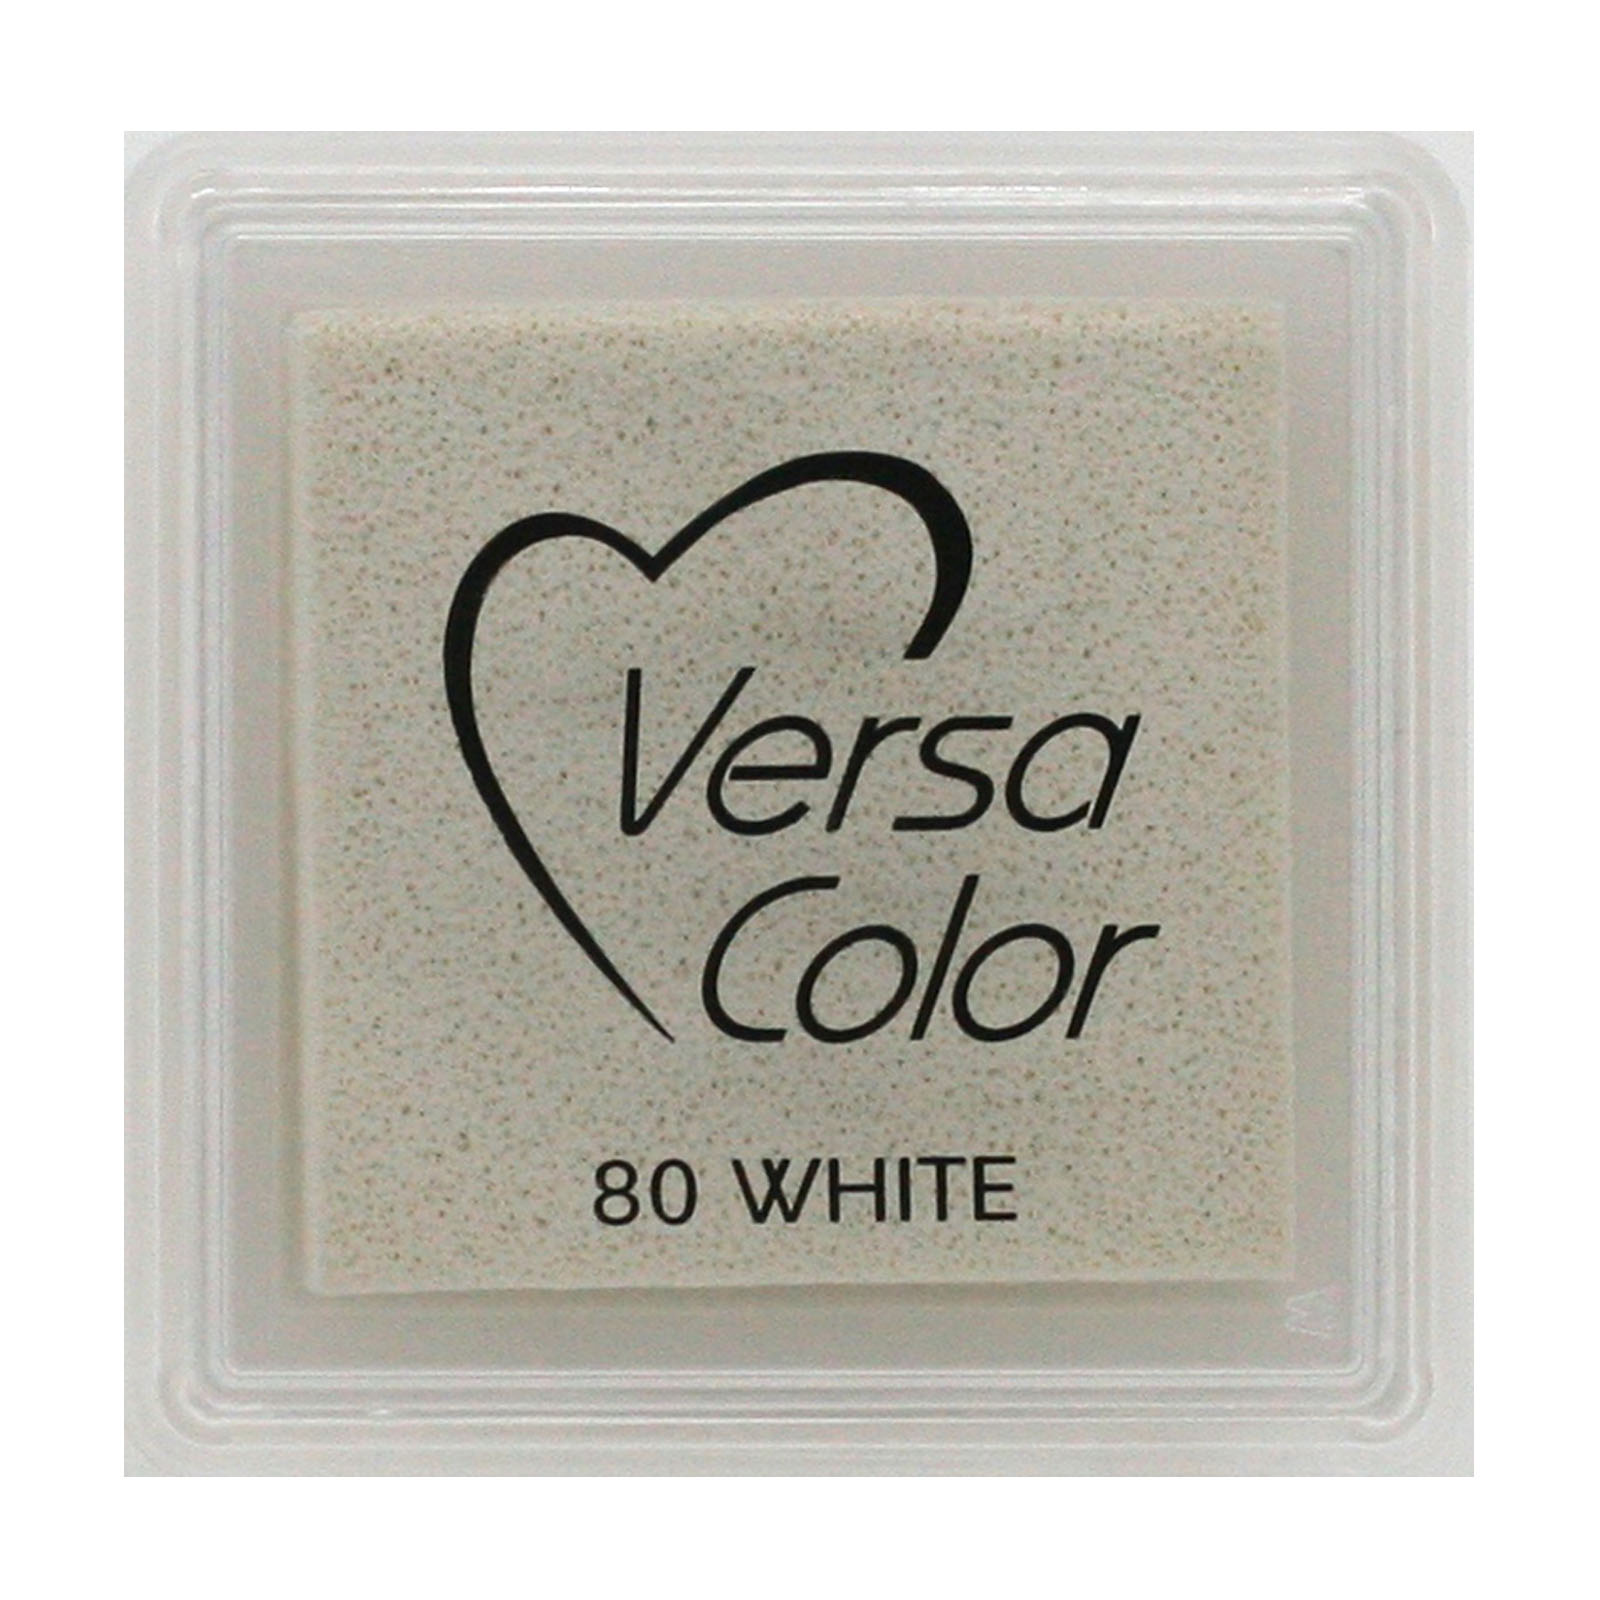 Versacolor Pigment Ink Pad White